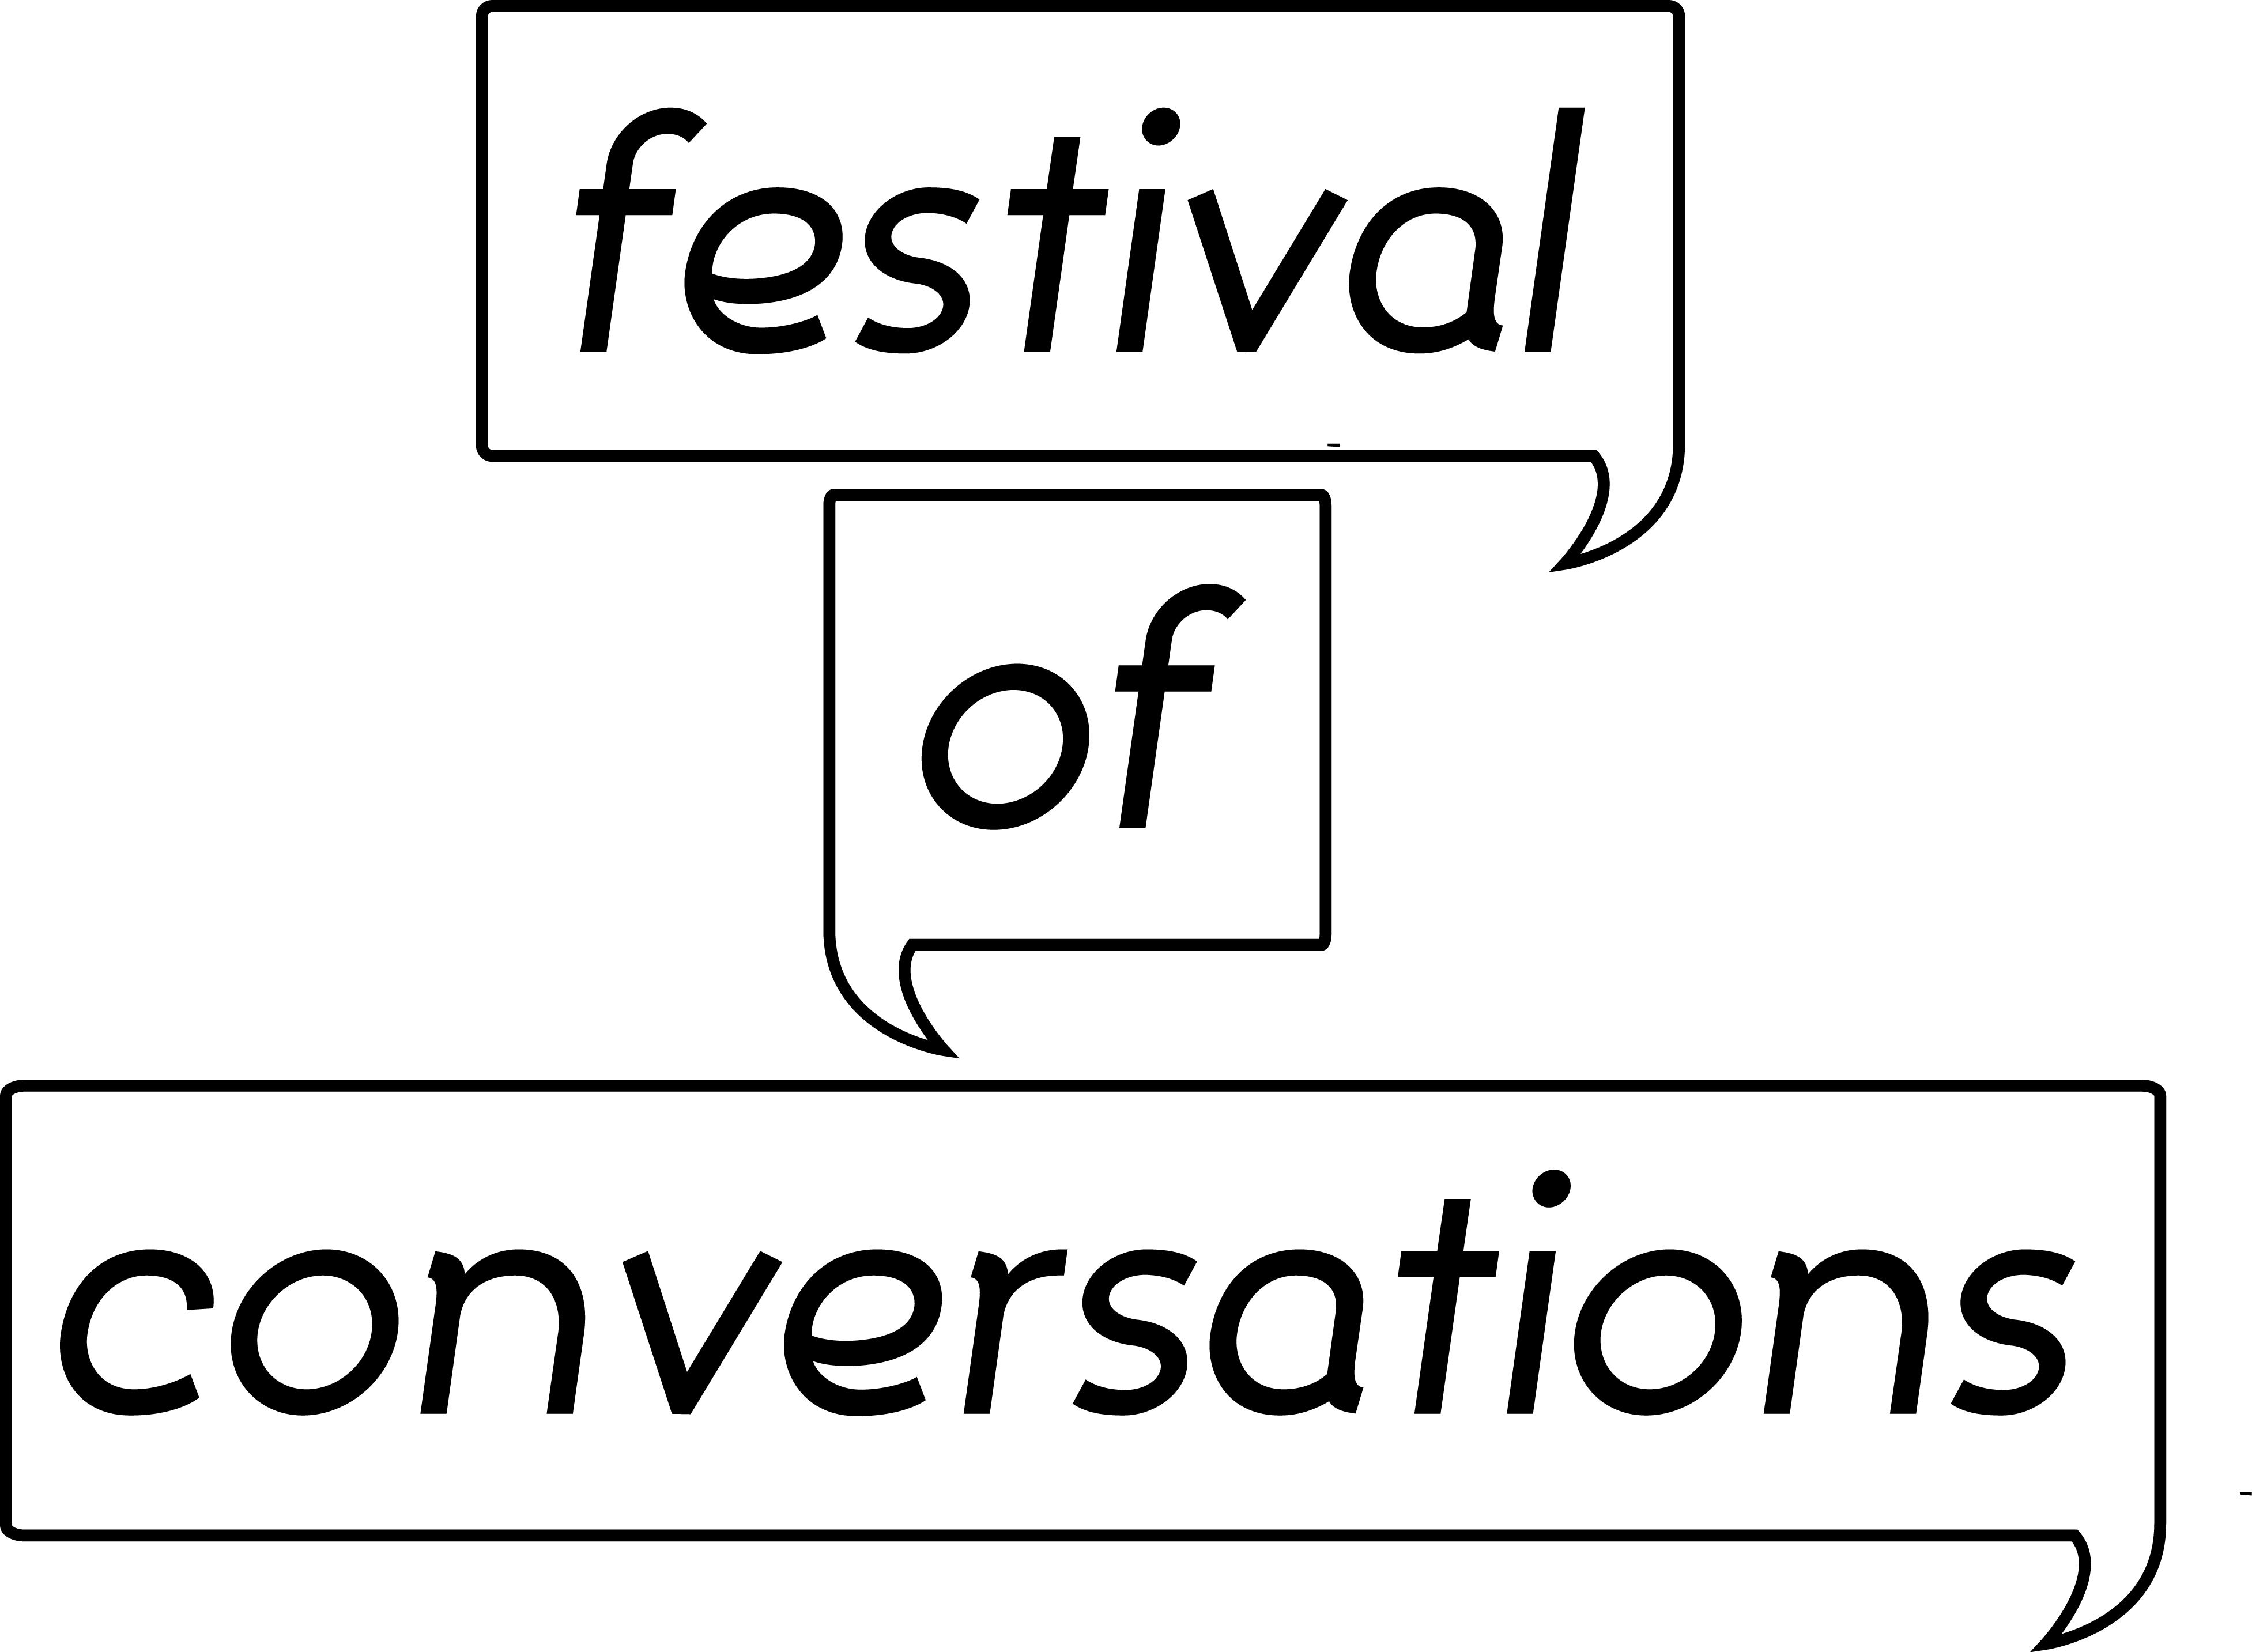 Festival of Conversations